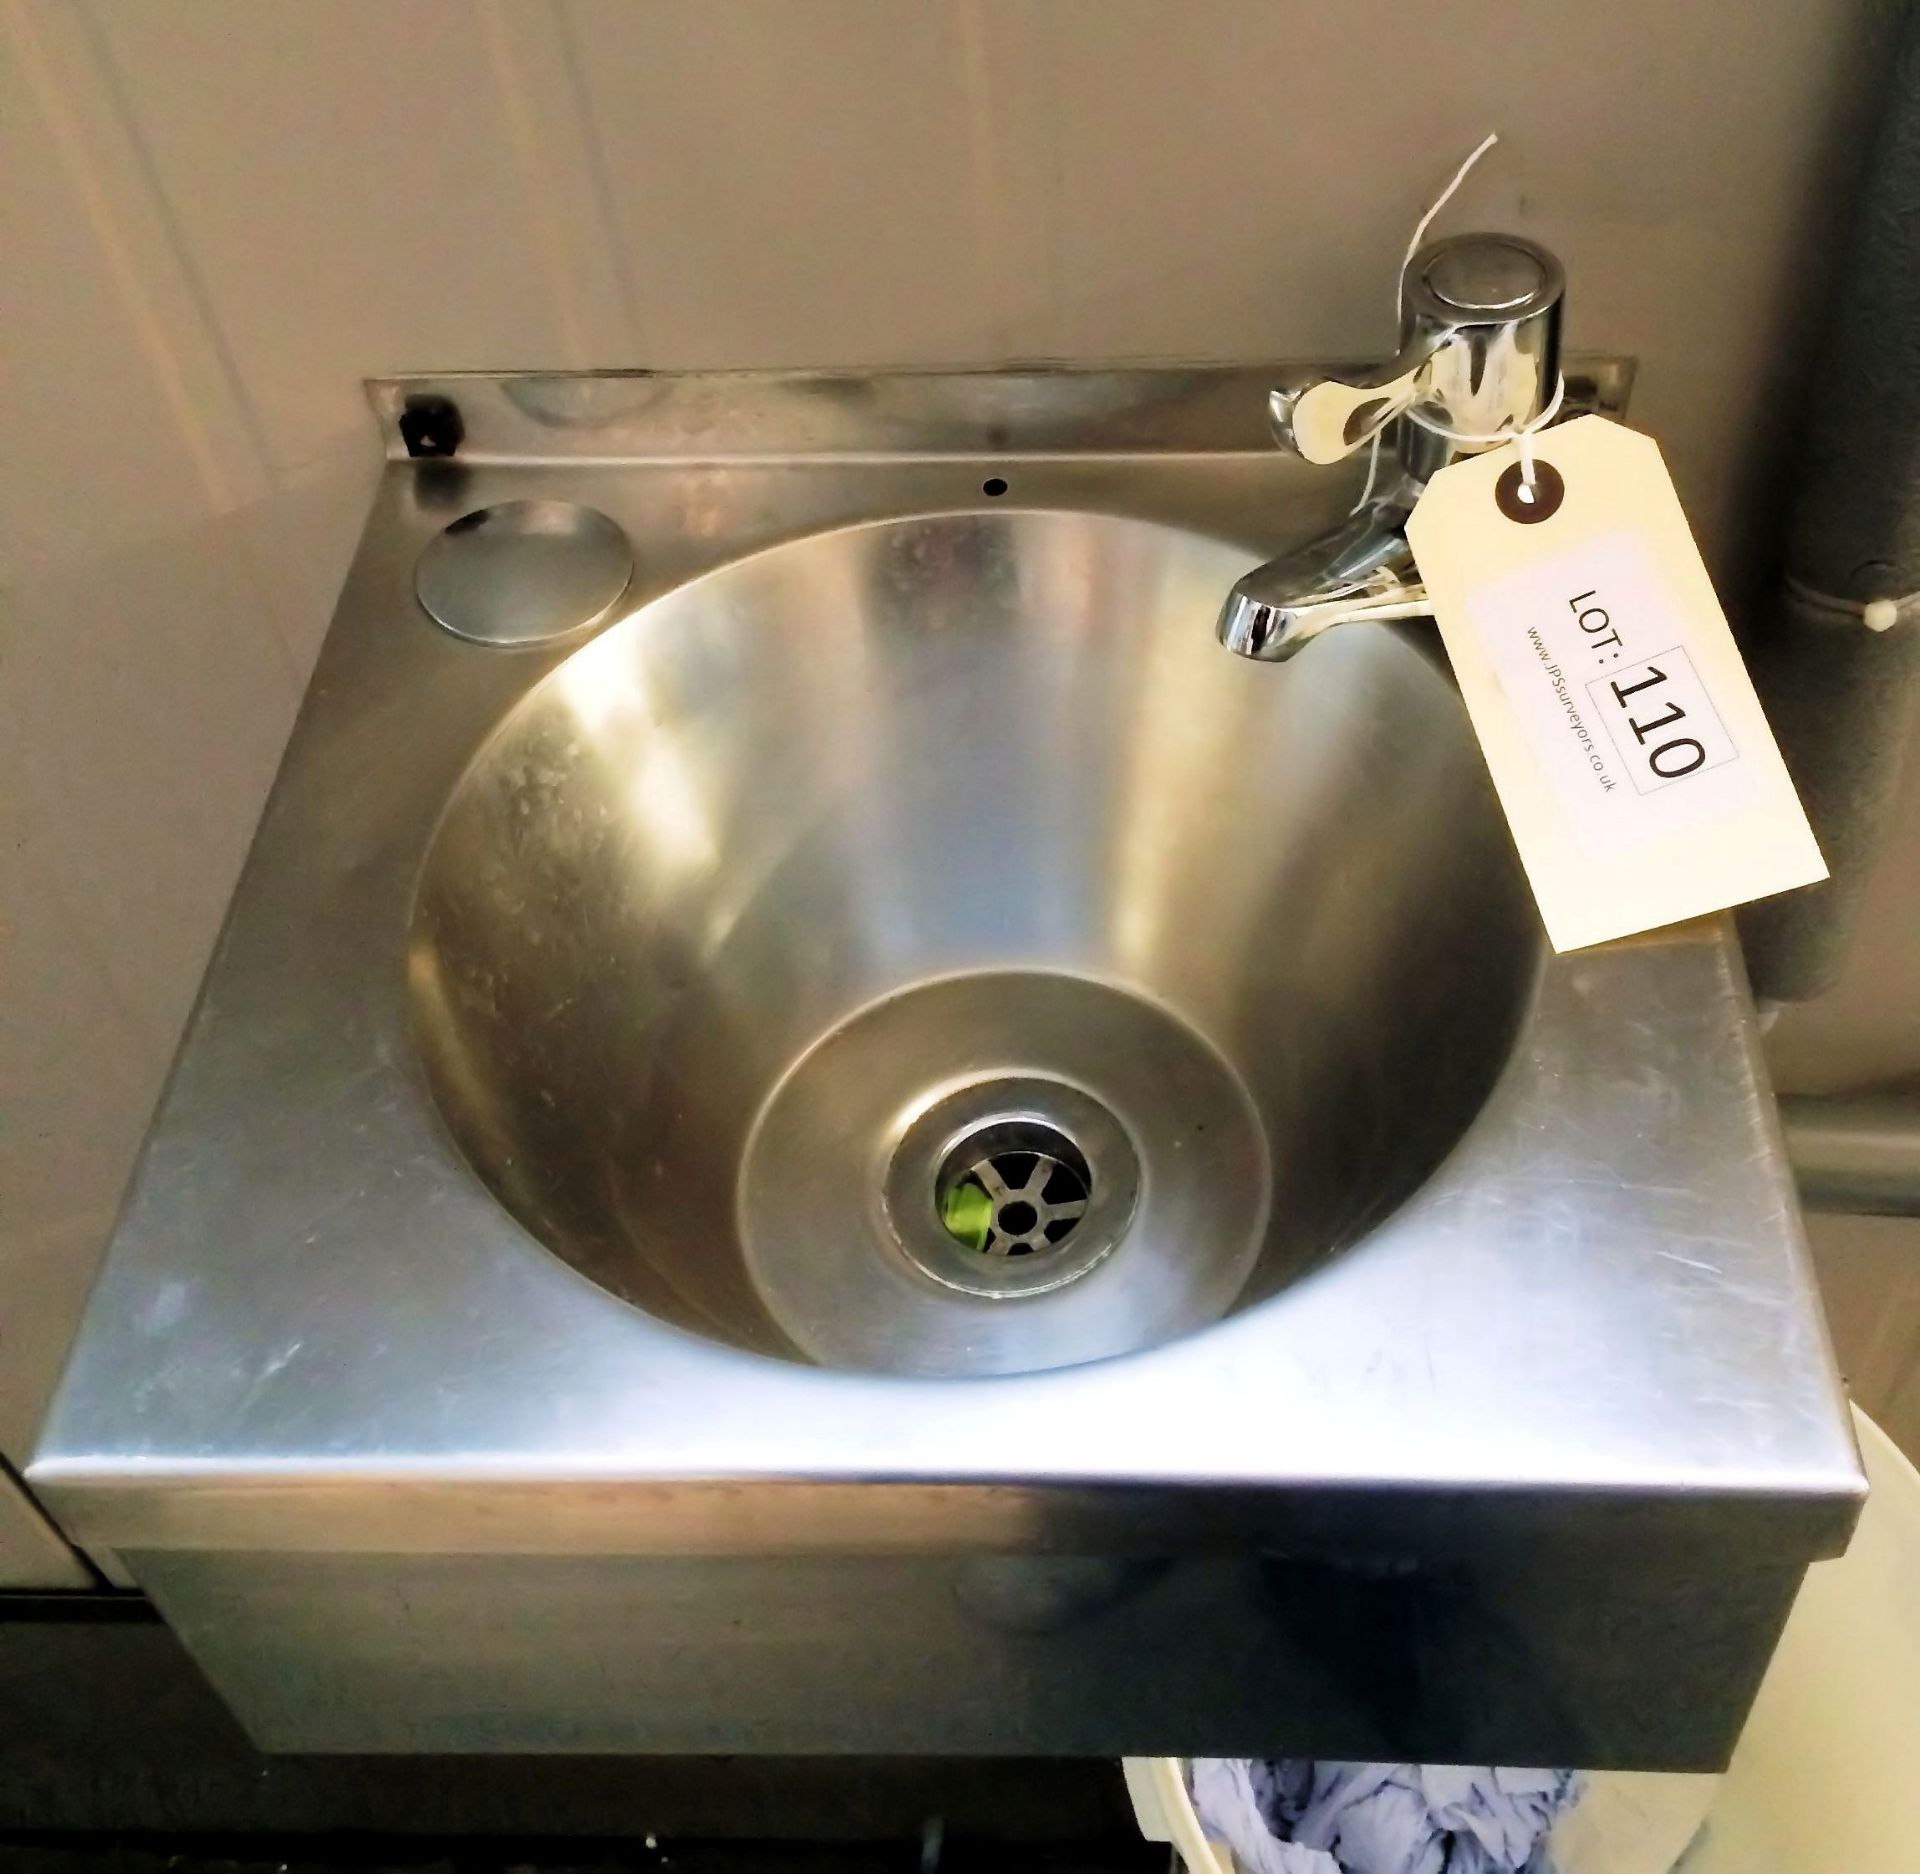 1 Tap stainless steel hand wash basin with soap & towel dispenser
Size: 30cm x 27cm  VAT: Vat is